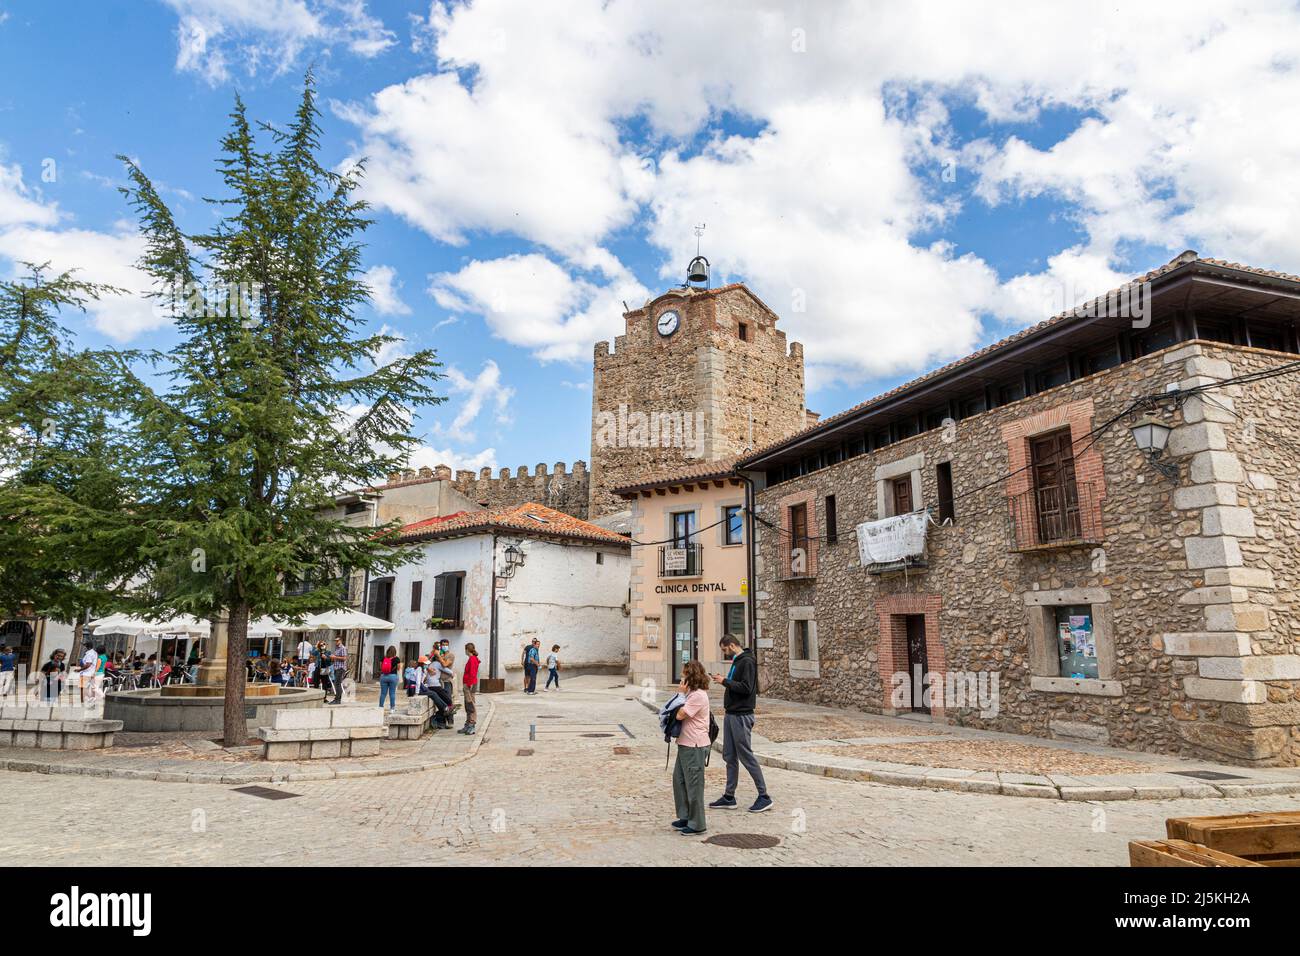 Buitrago del Lozoya, Spain. The Torre Albarrana, a city gate and defensive clock tower of the walled Old Town, seen from Plaza de la Constitucion Stock Photo